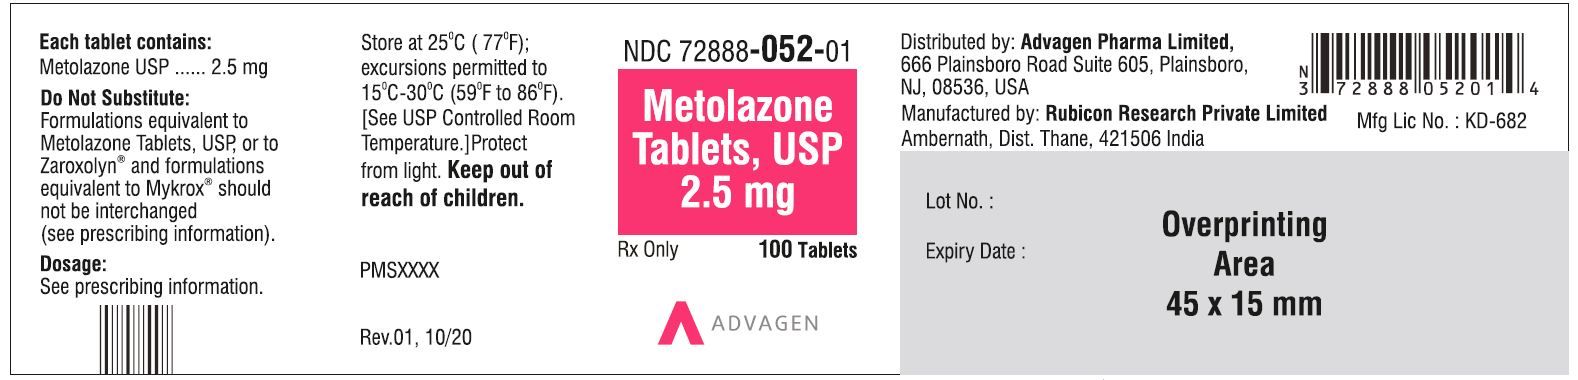 Metolazone Tablets USP, 2.5mg - NDC: <a href=/NDC/72888-052-01>72888-052-01</a> - 100 Tablets Bottle Label